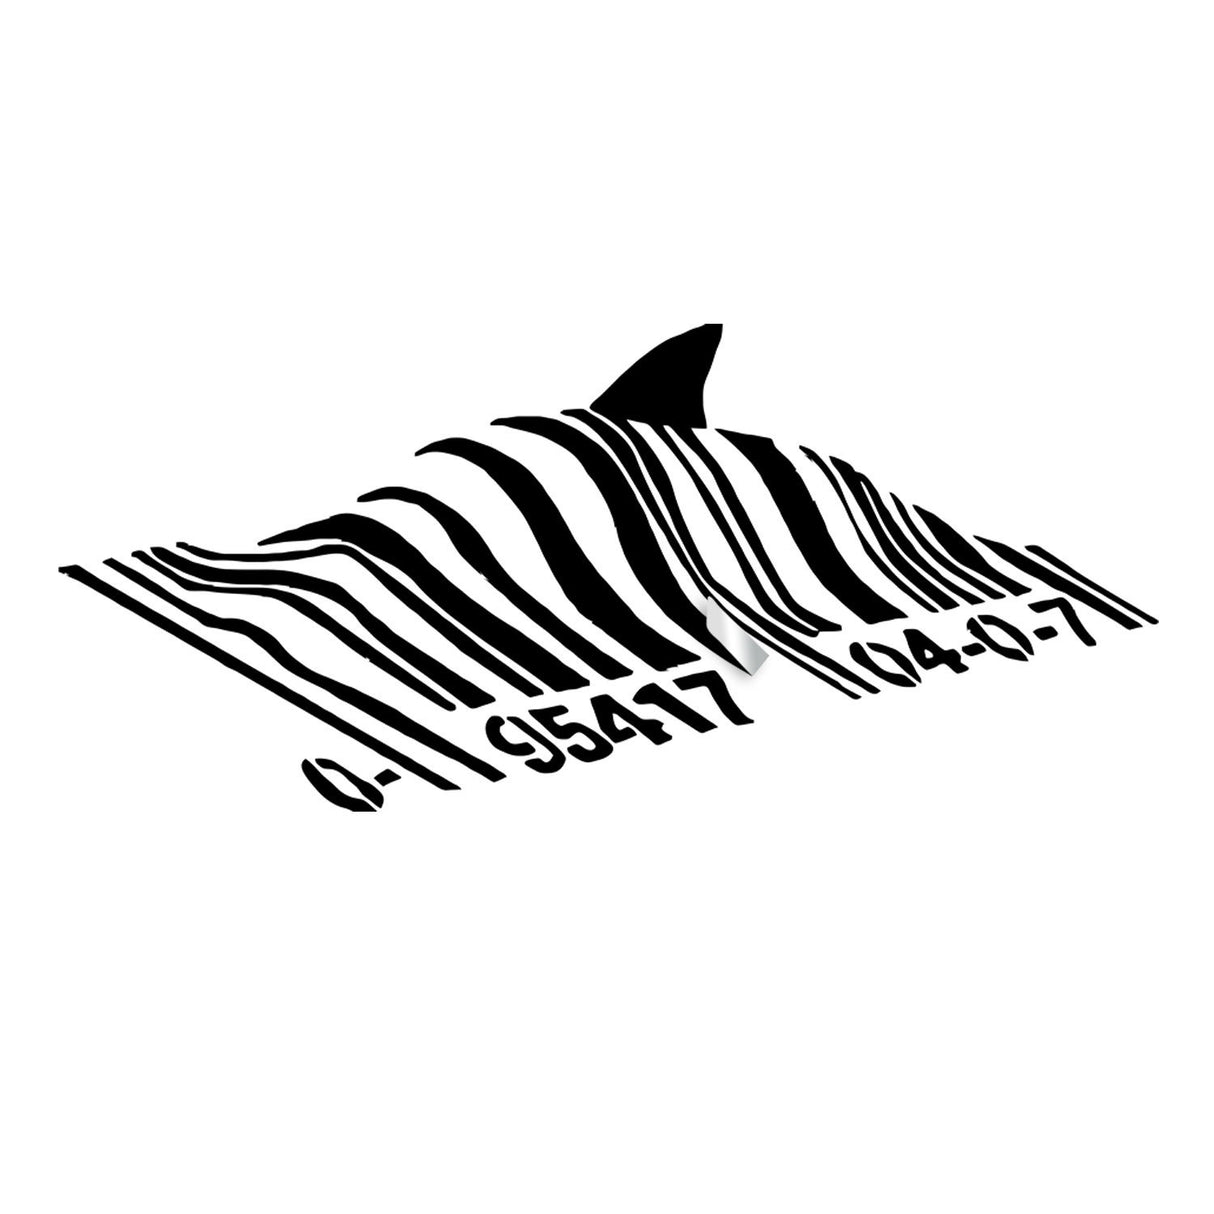 Banksy Barcode Shark Wall Sticker - Swimming Fish Under Bar Code Vinyl Decal